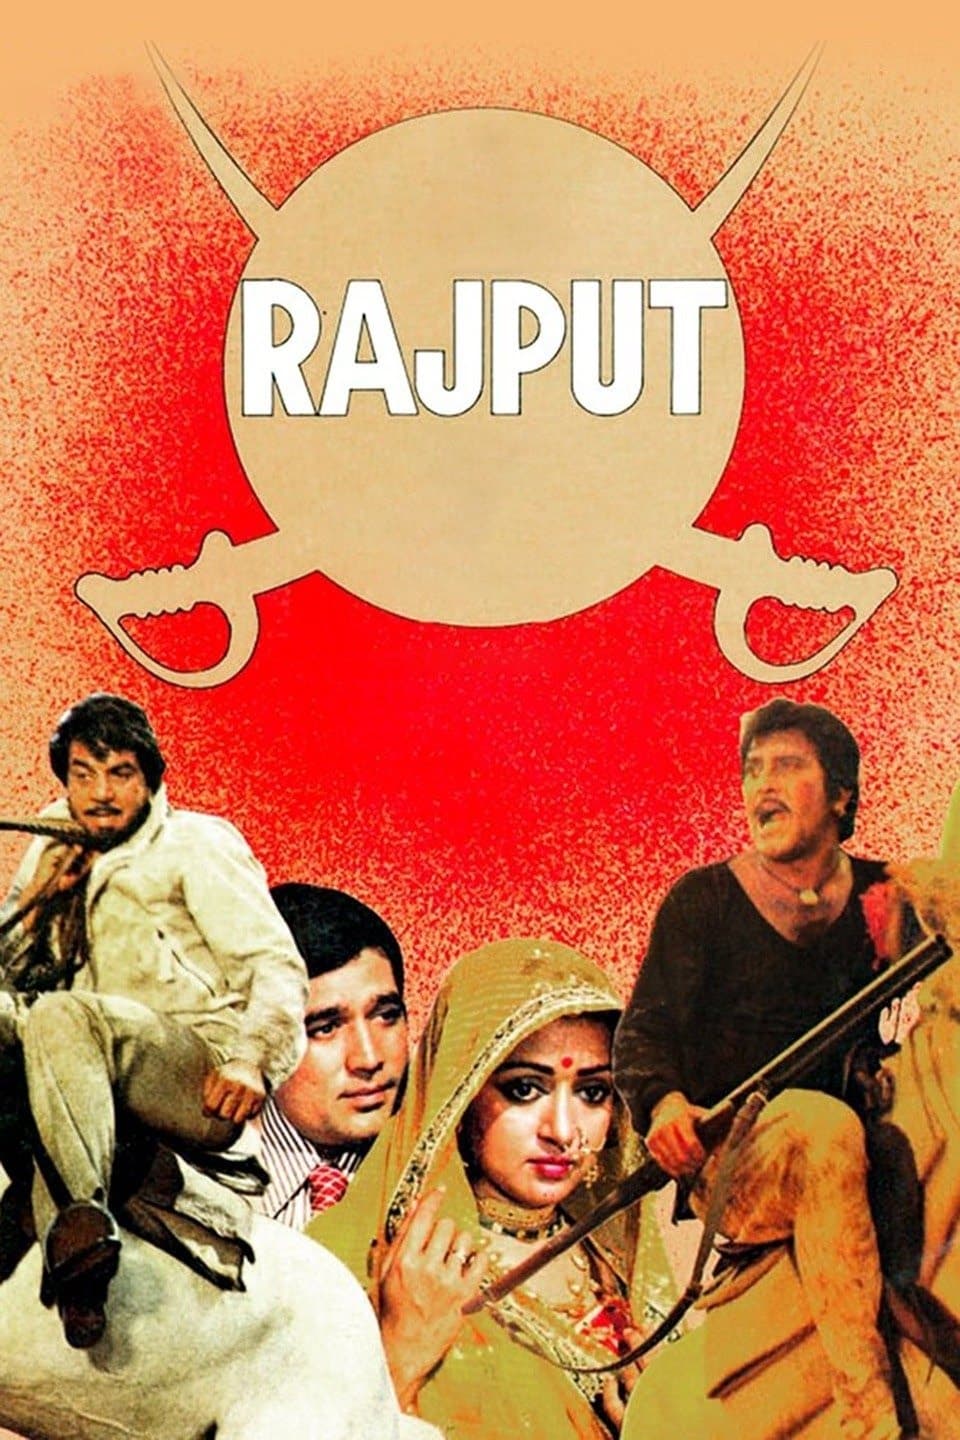 Rajput